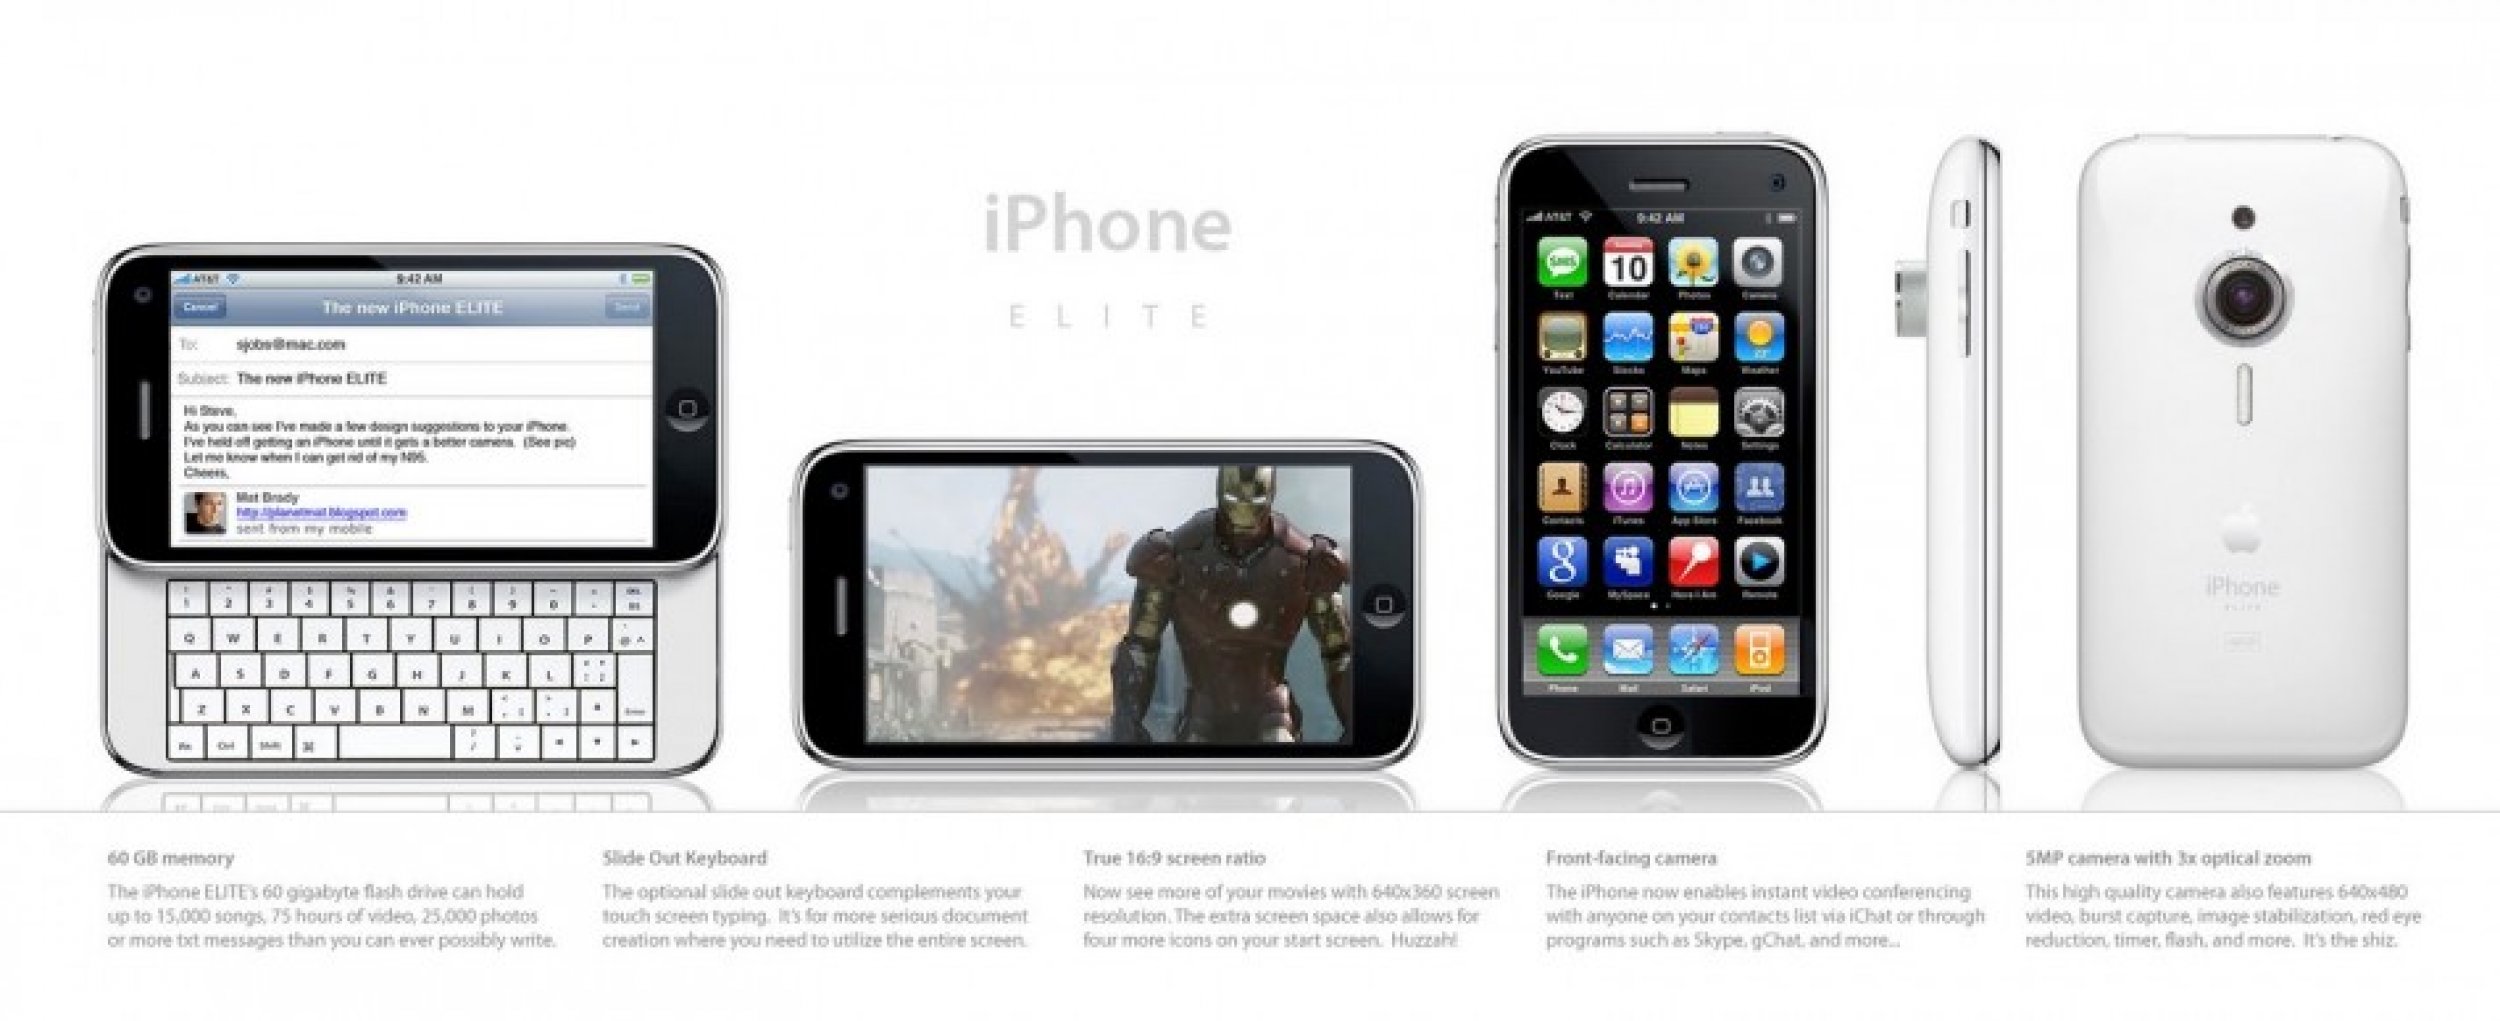 iPhone ELITE concept designed by Mat Brady